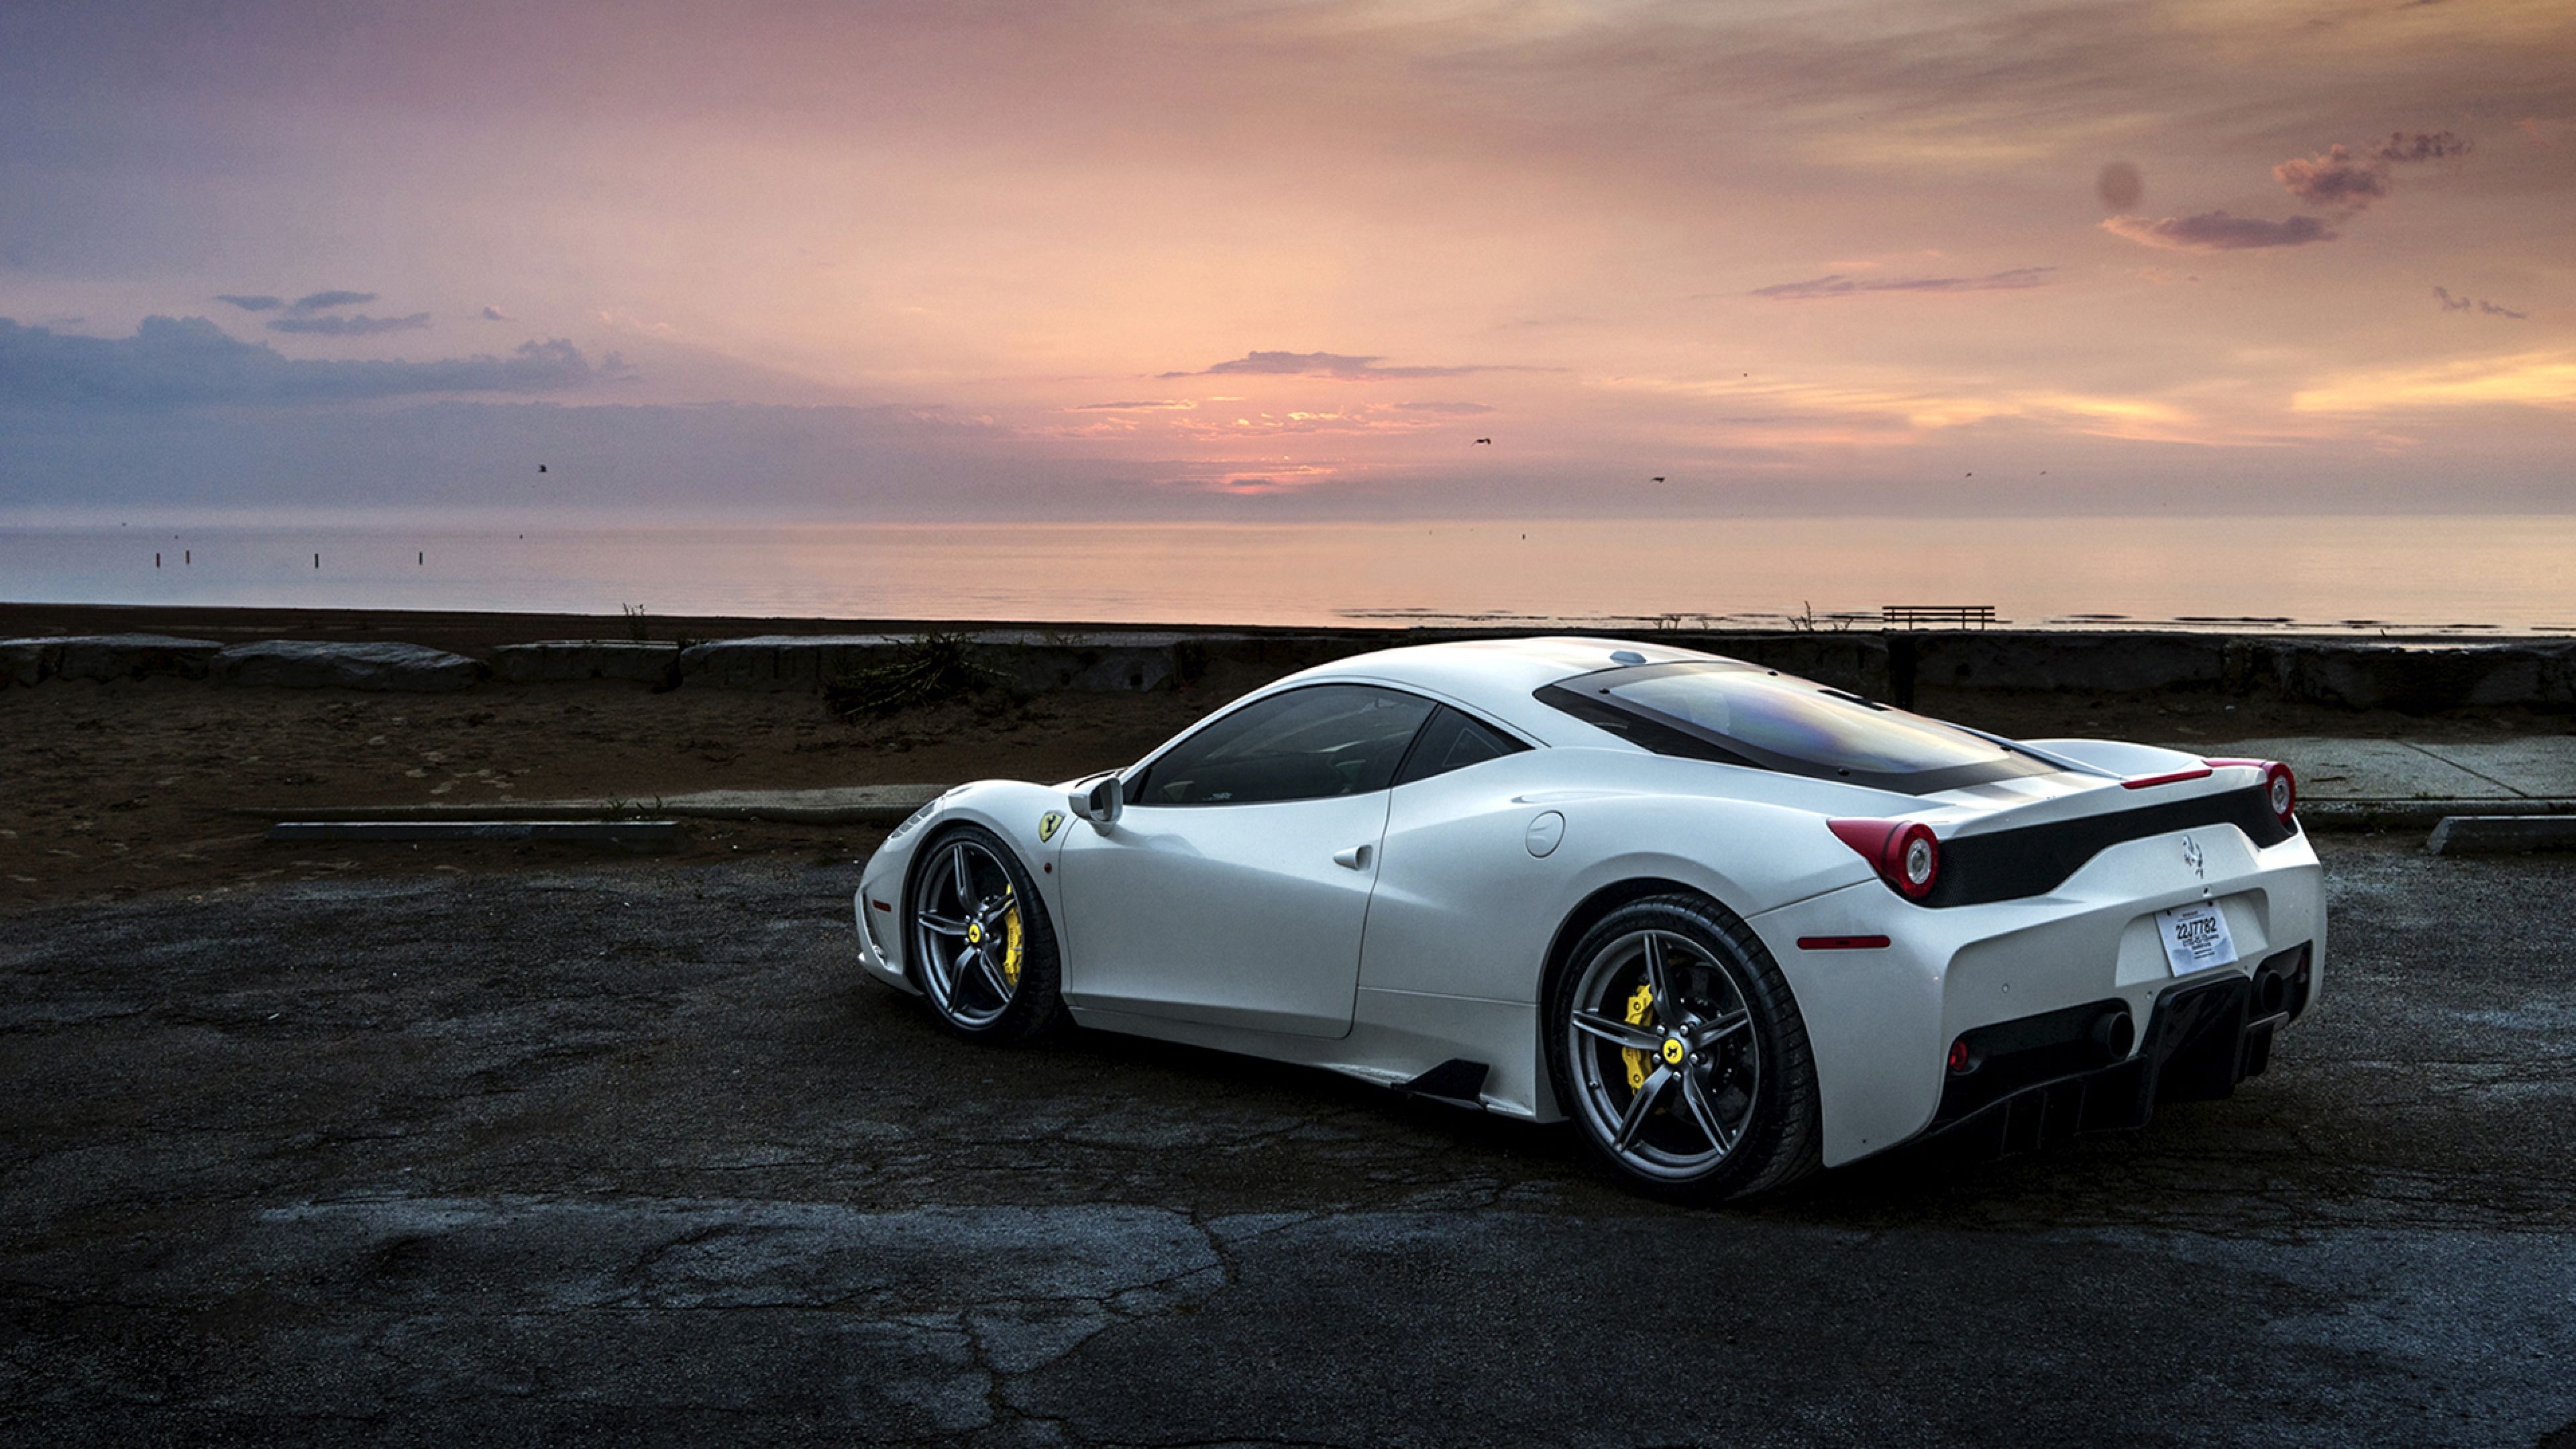 Ferrari 458 blanco, coches HD, fondos de pantalla 4k, imágenes, fondos